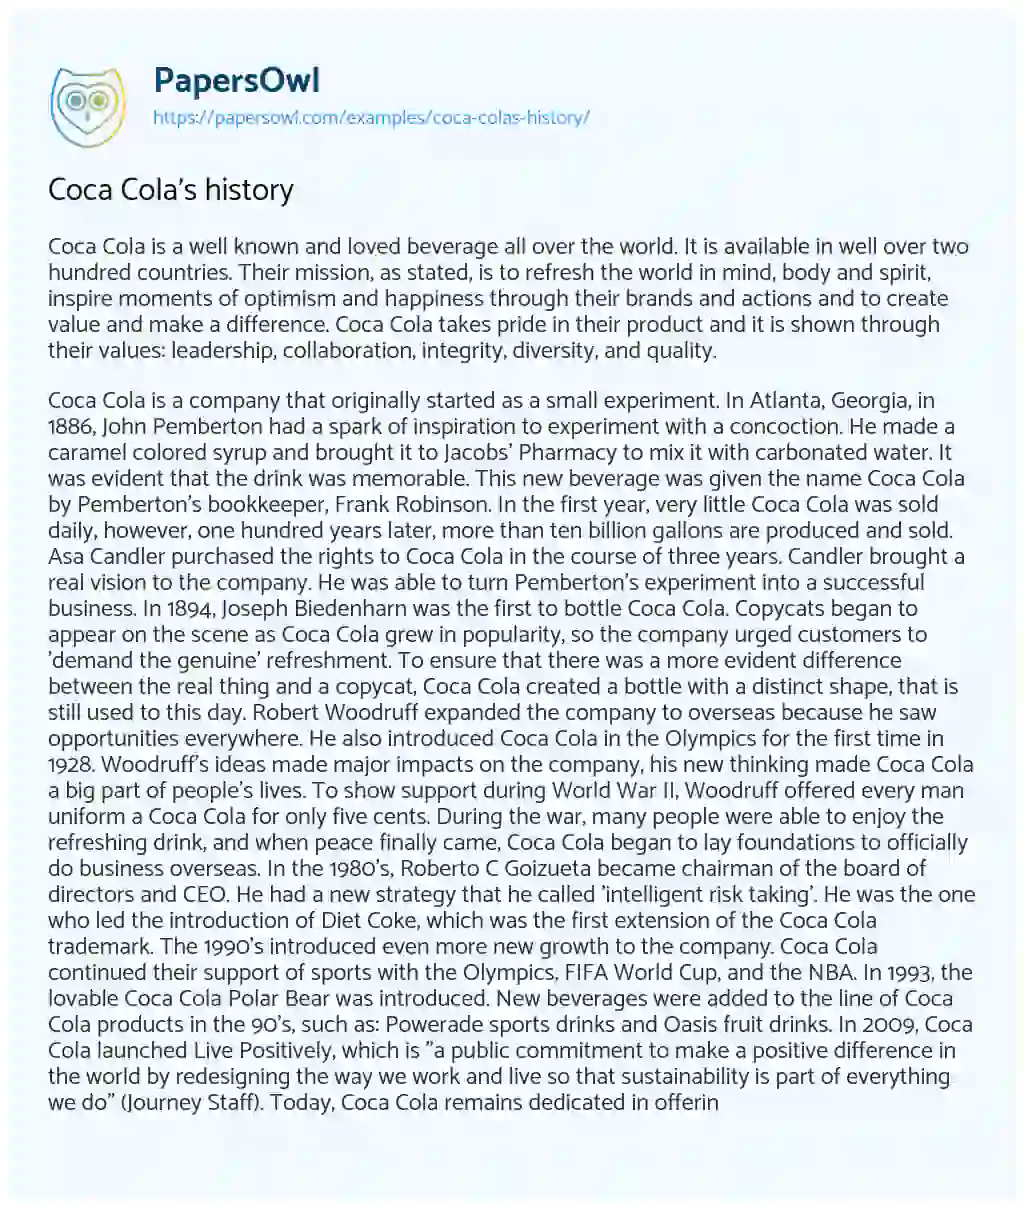 Coca Cola’s History essay